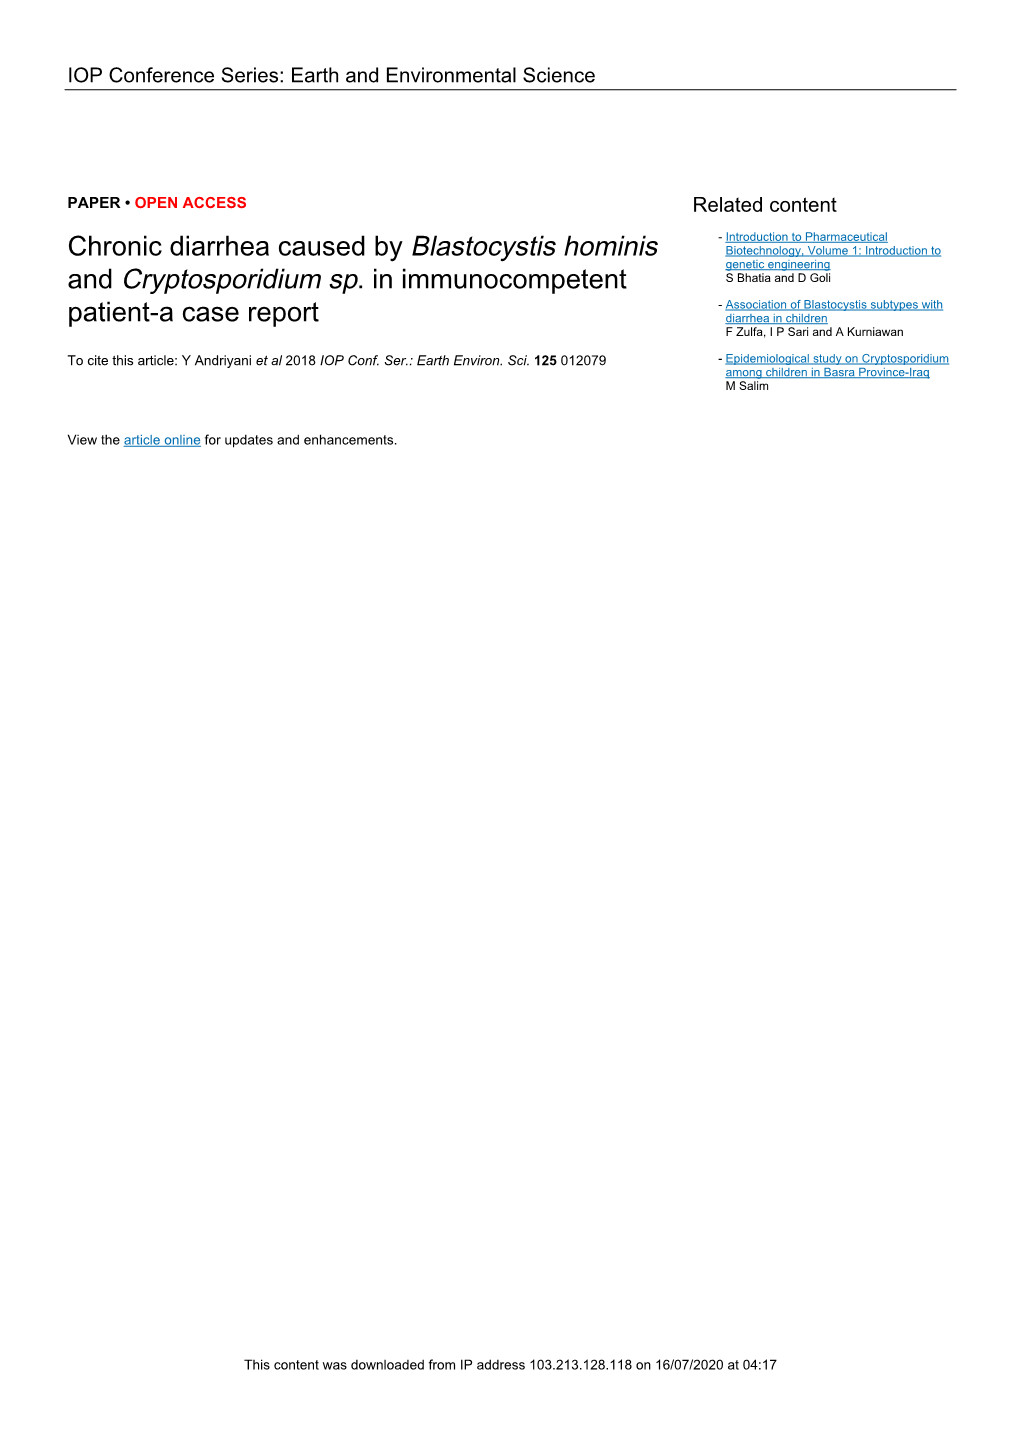 Chronic Diarrhea Caused by Blastocystis Hominis and Cryptosporidium Sp. in Immunocompetent Patient-A Case Report